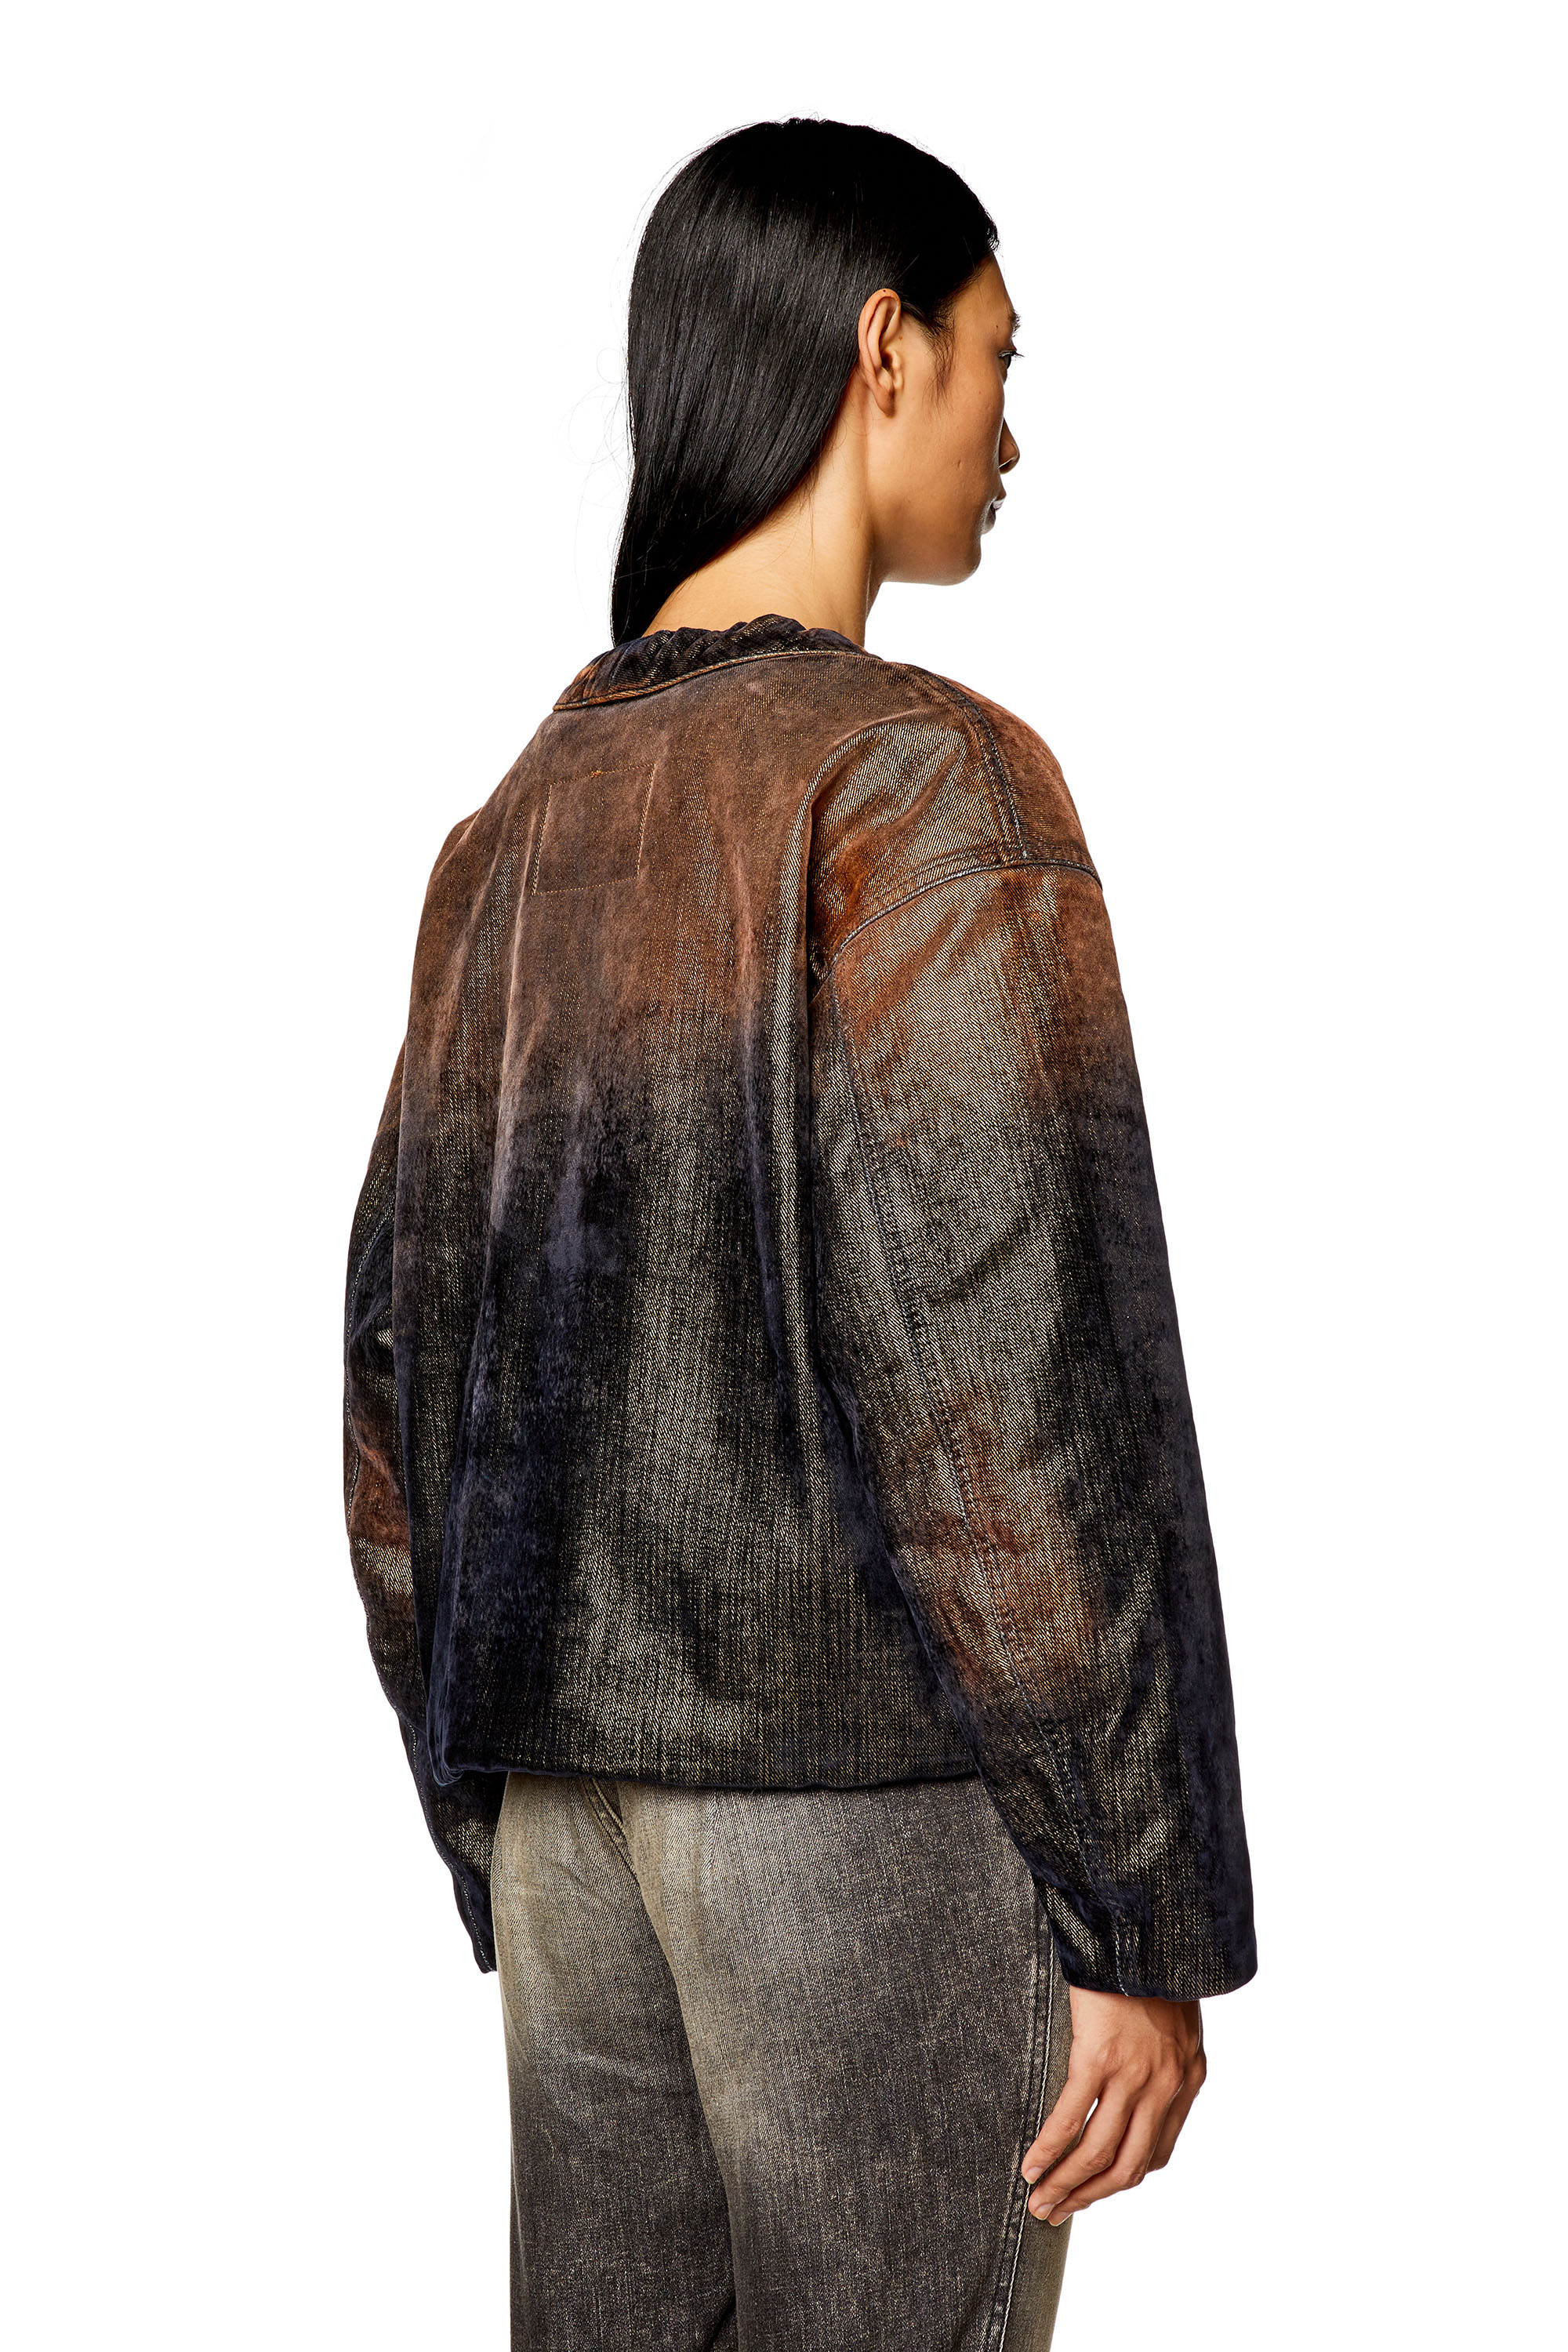 Diesel - DE-CONF-S, Woman Jacket in shimmery denim in Multicolor - Image 3